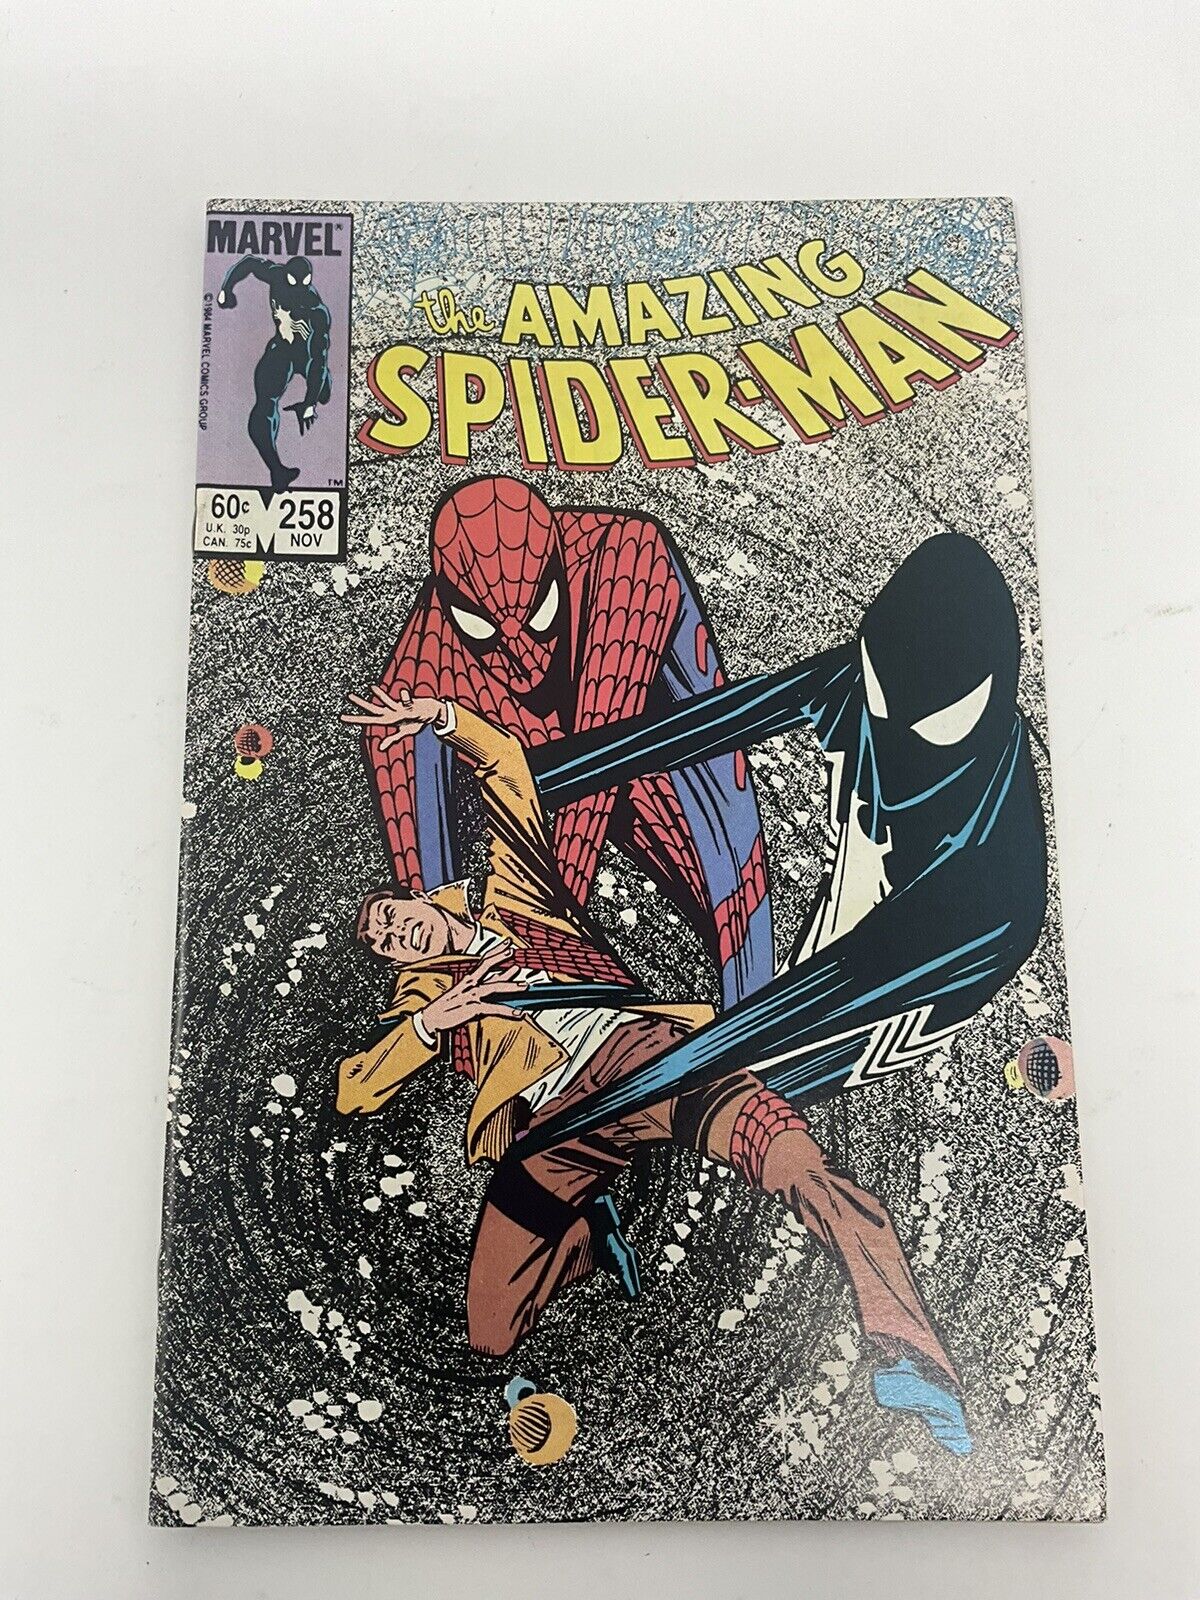 THE AMAZING SPIDER-MAN #258 ~ MARVEL COMICS 1984 ~ NM High Grade